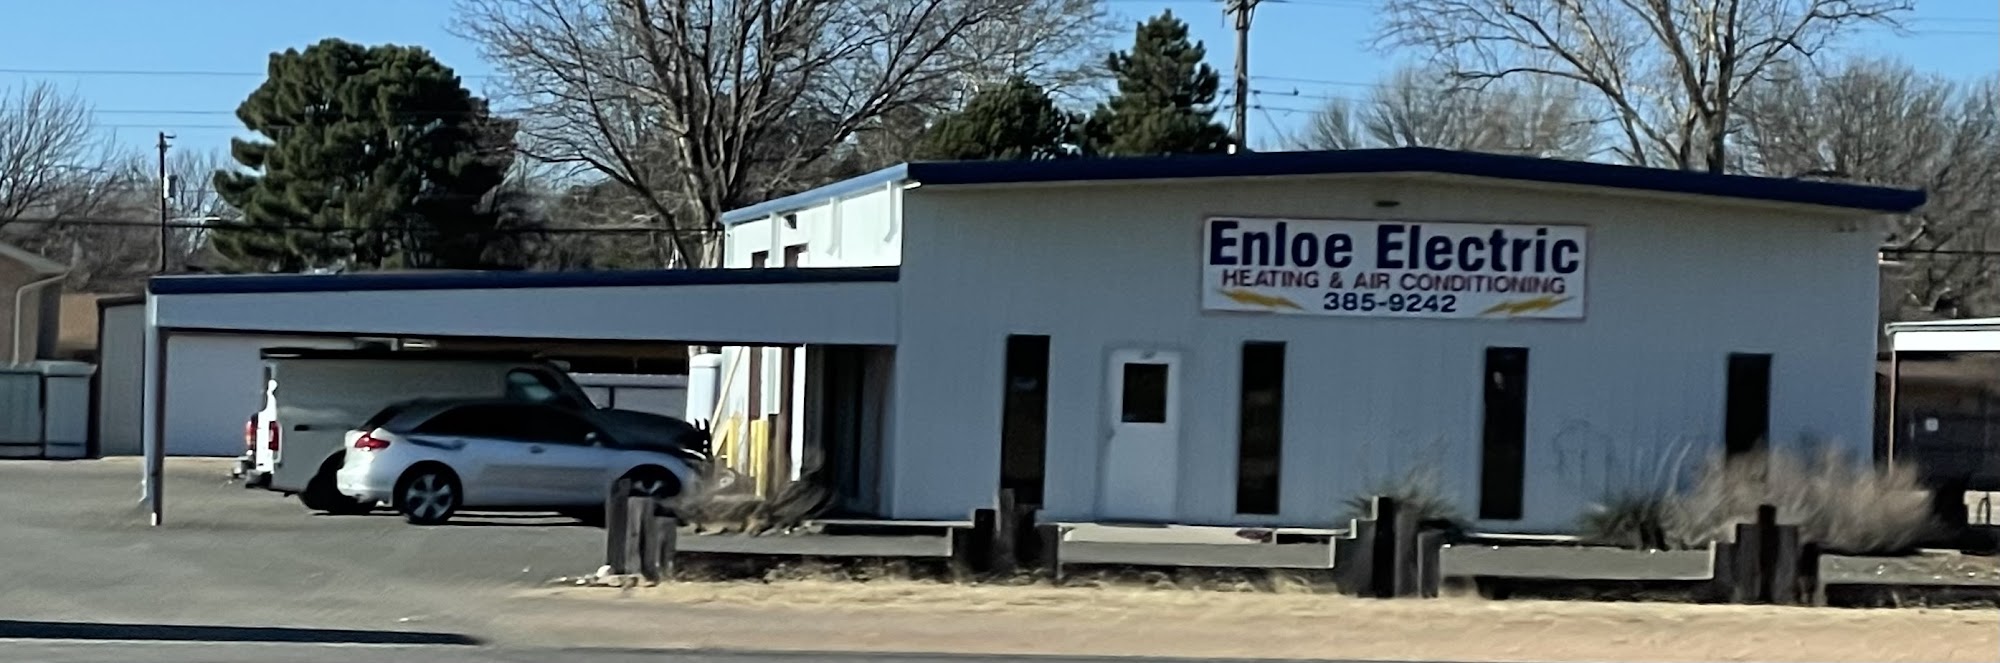 Enloe Electric Heating & Air 120 E Marshall Howard Blvd, Littlefield Texas 79339